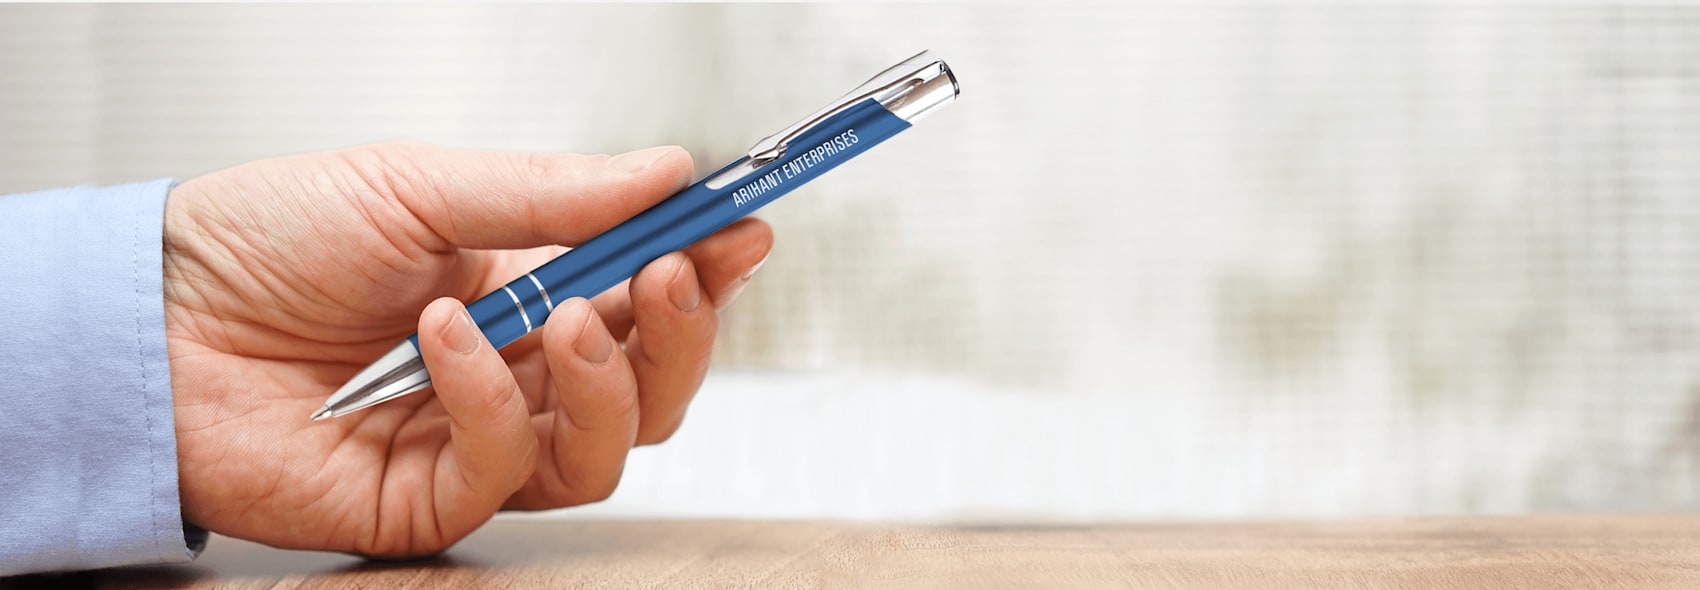 Larger version: personalised sleek pens